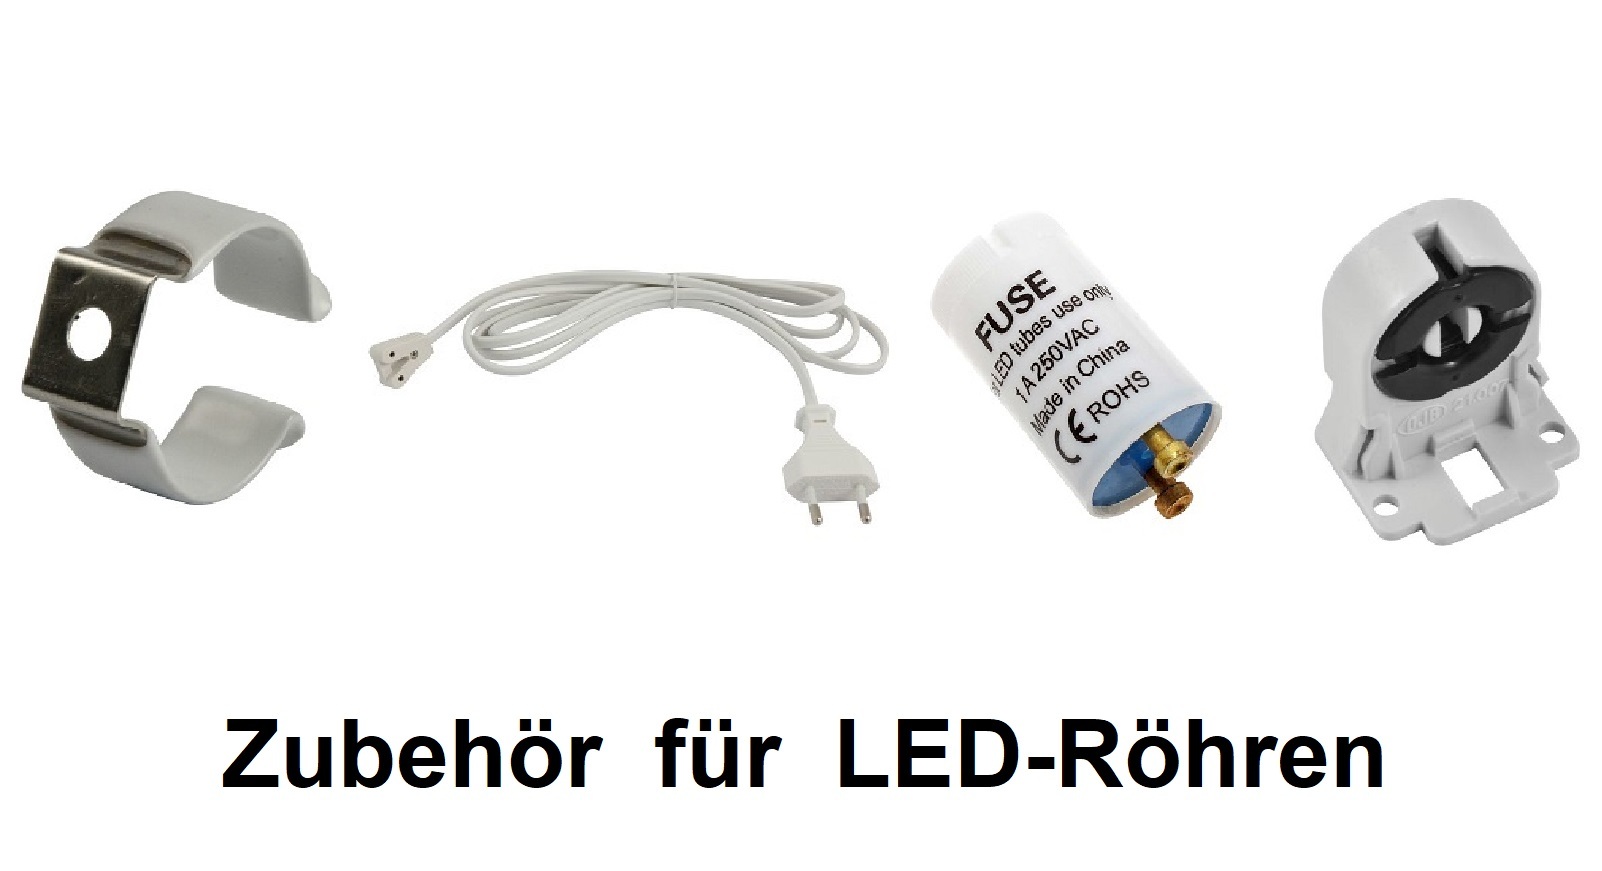 Zubehoer-LED-Roehren_1